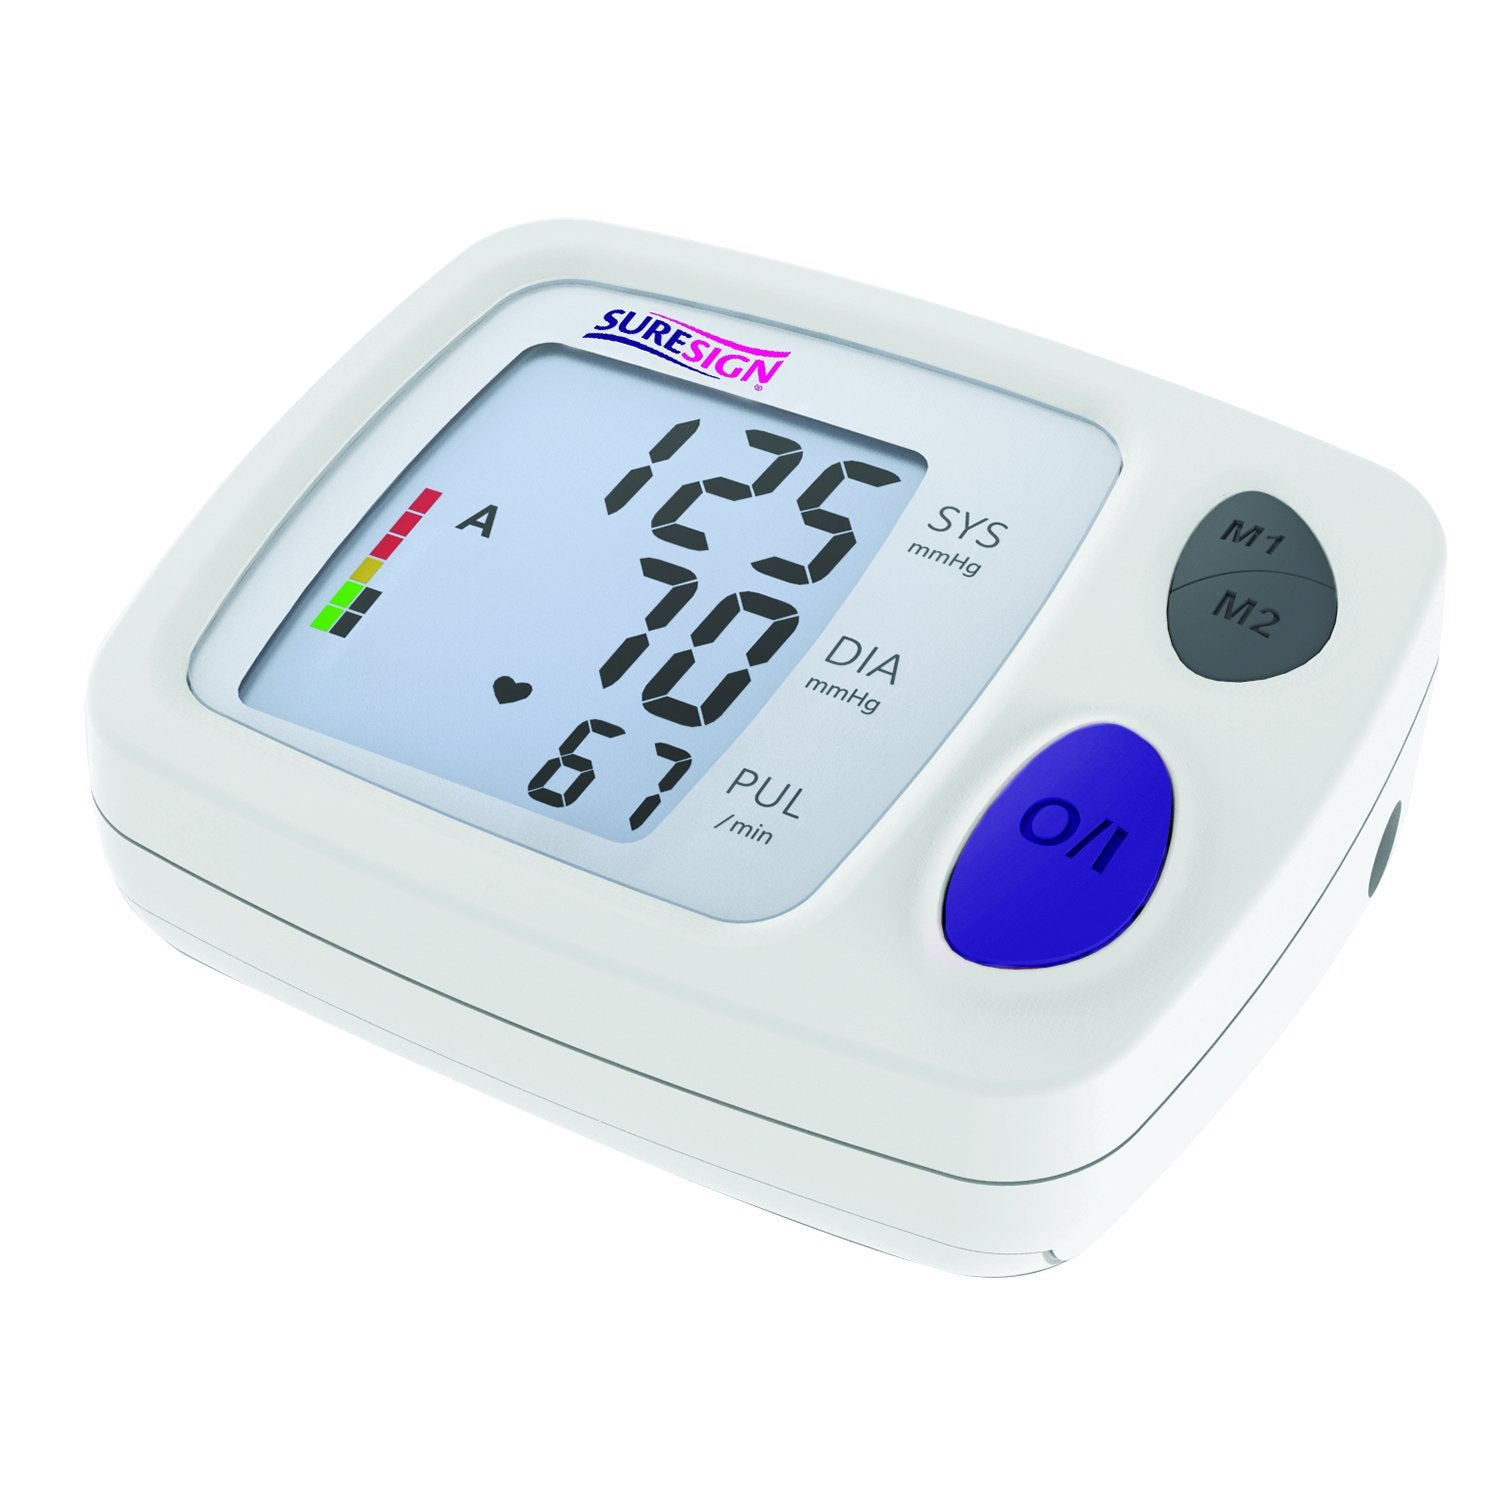 Suresign Blood Pressure Monitor (1)